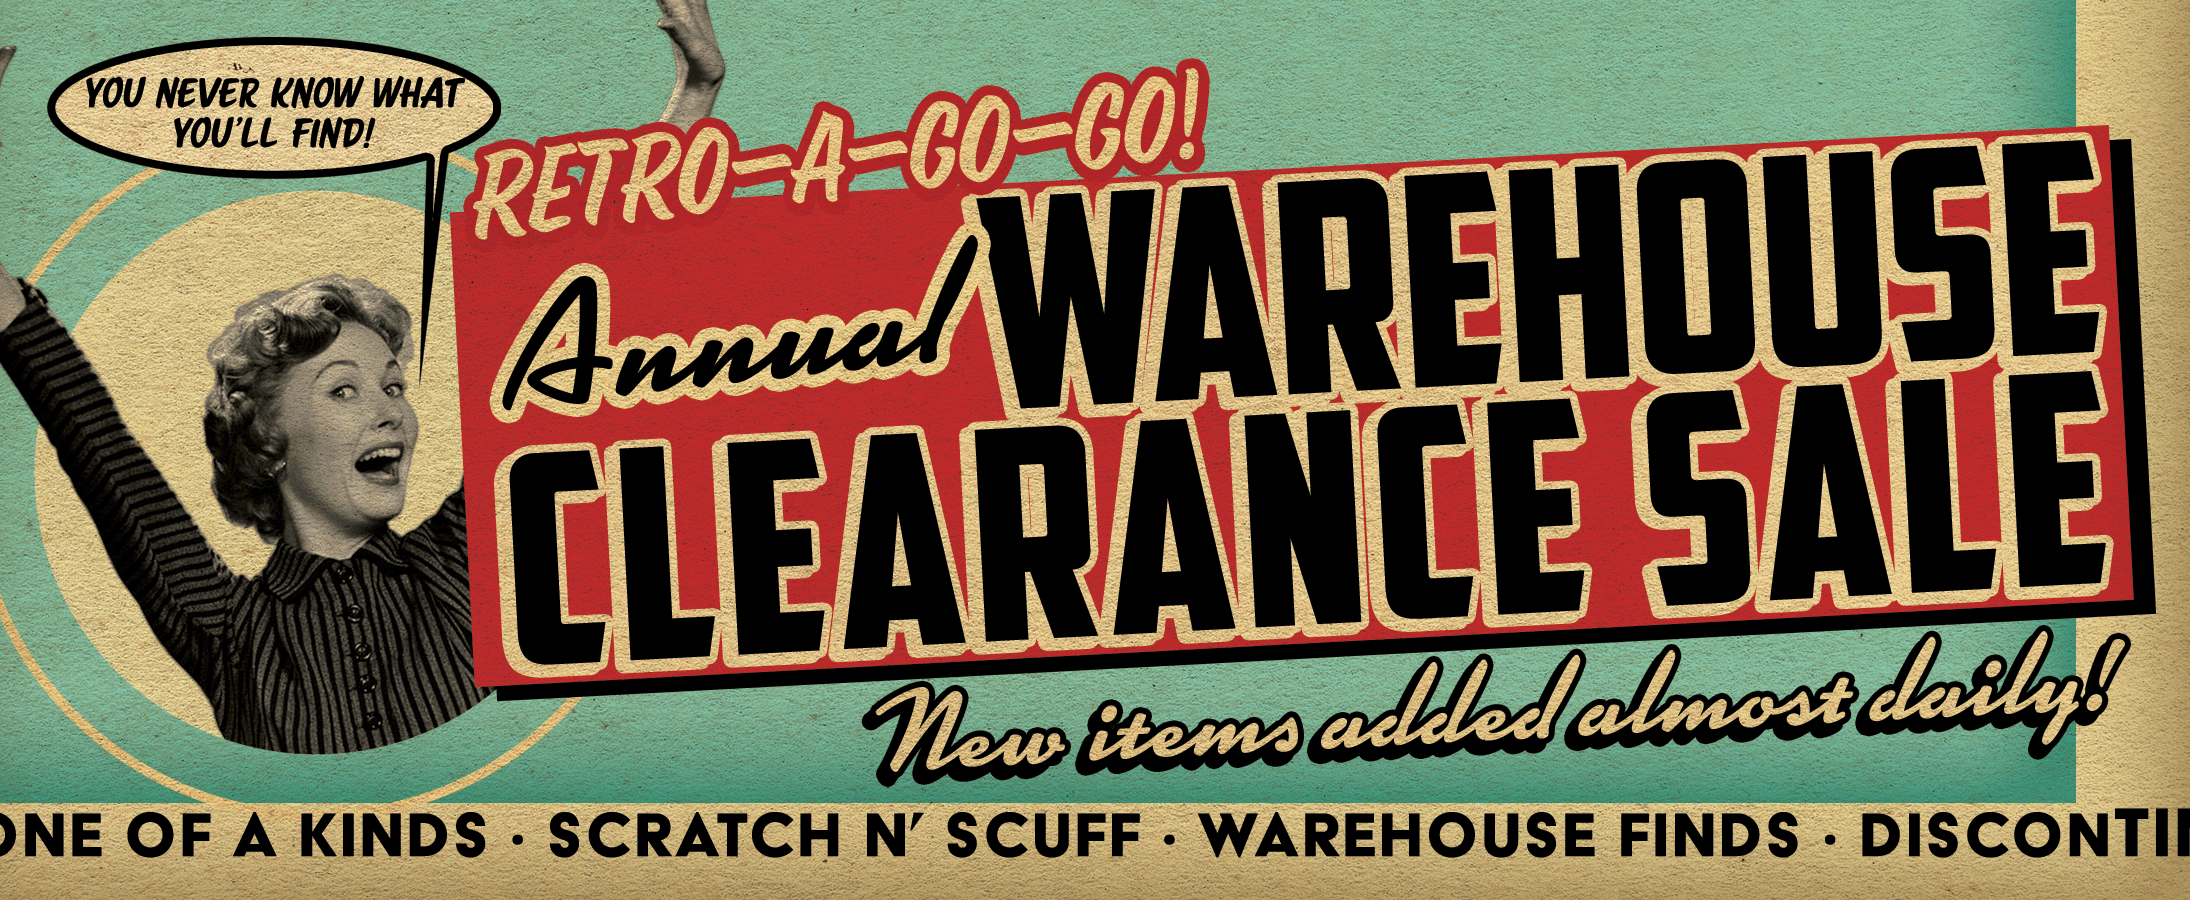 Annual Warehouse Clearance Sale - Page 1 - Retro-a-go-go!